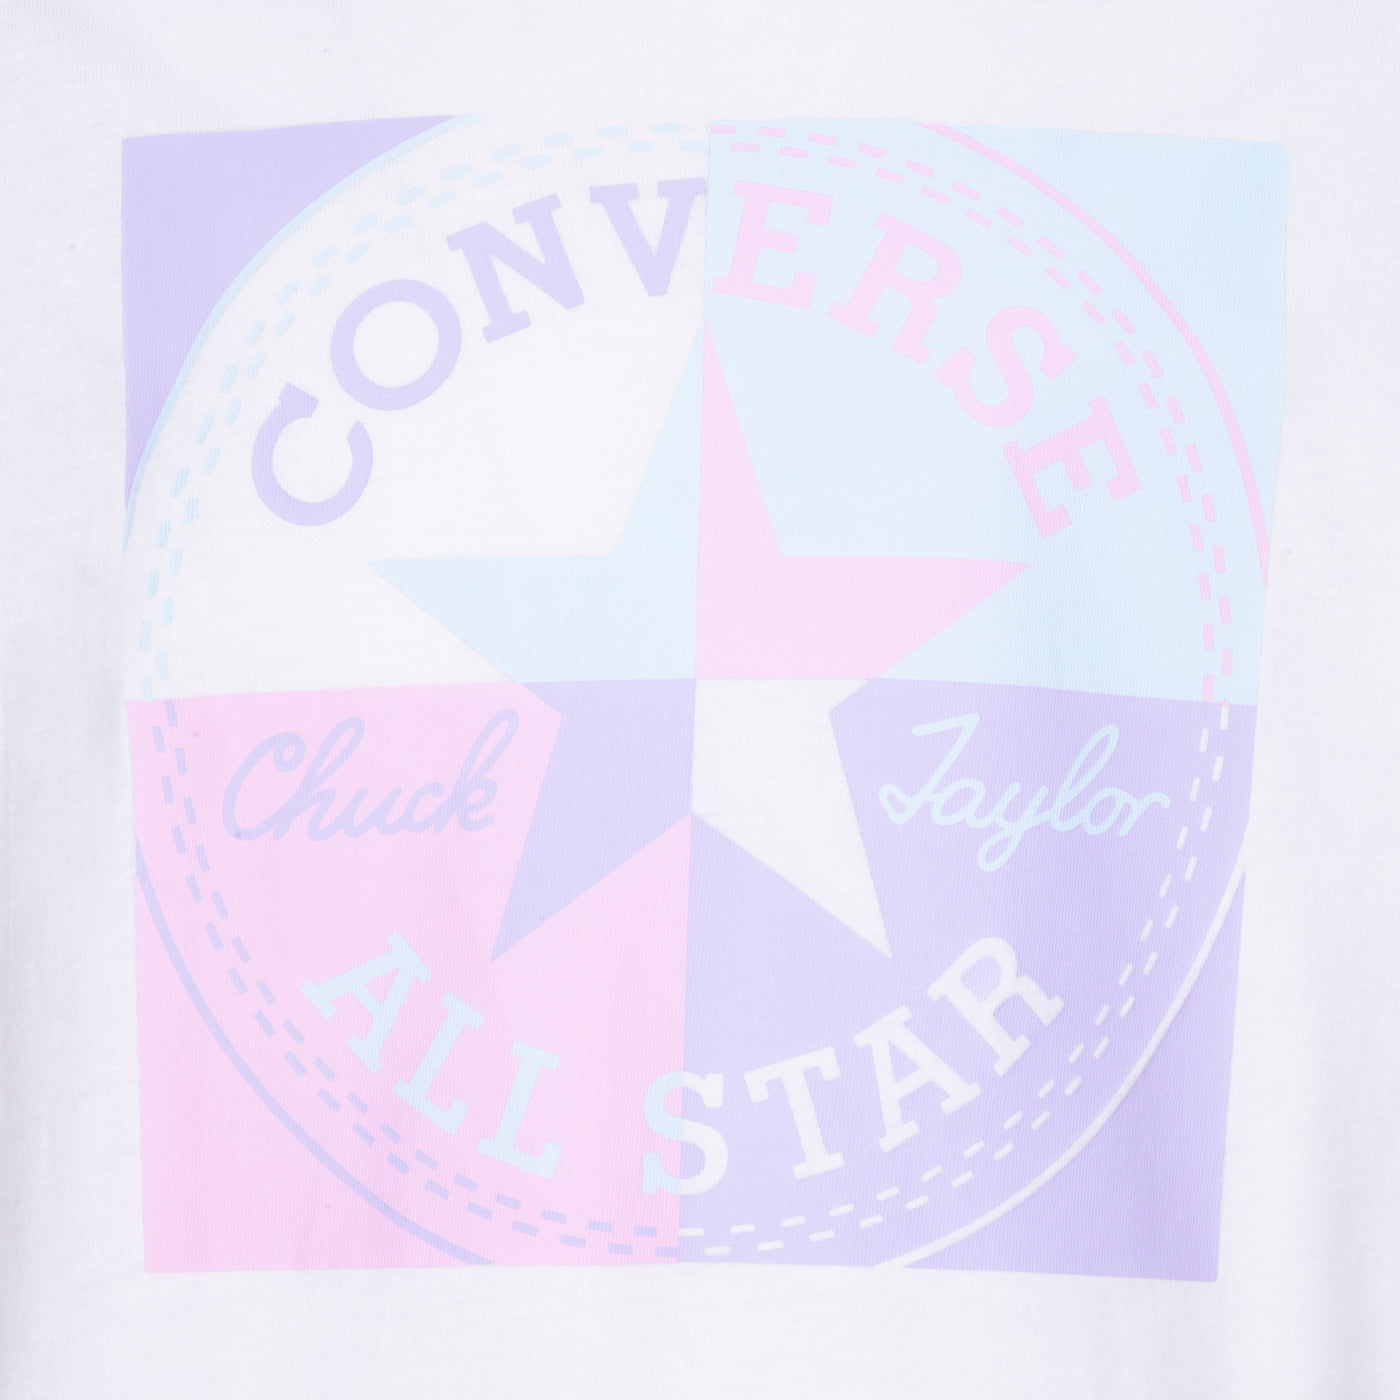 Converse multi ringer boxy tee T Shirt Converse   